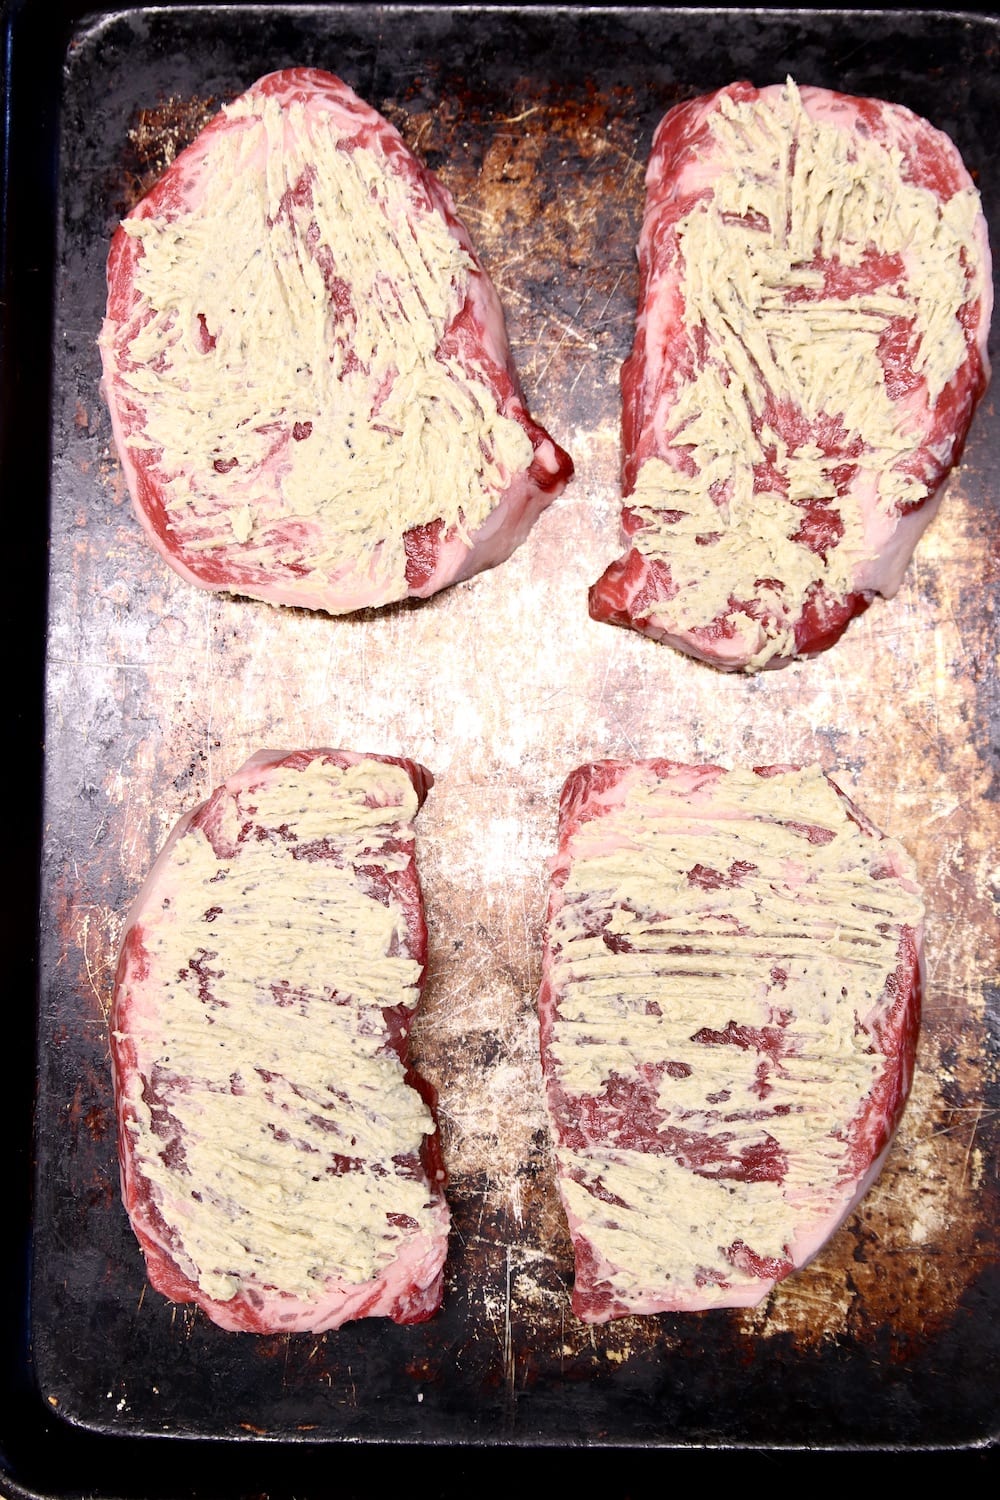 4 ribeye steaks coated with seasoned butter on a sheet pan